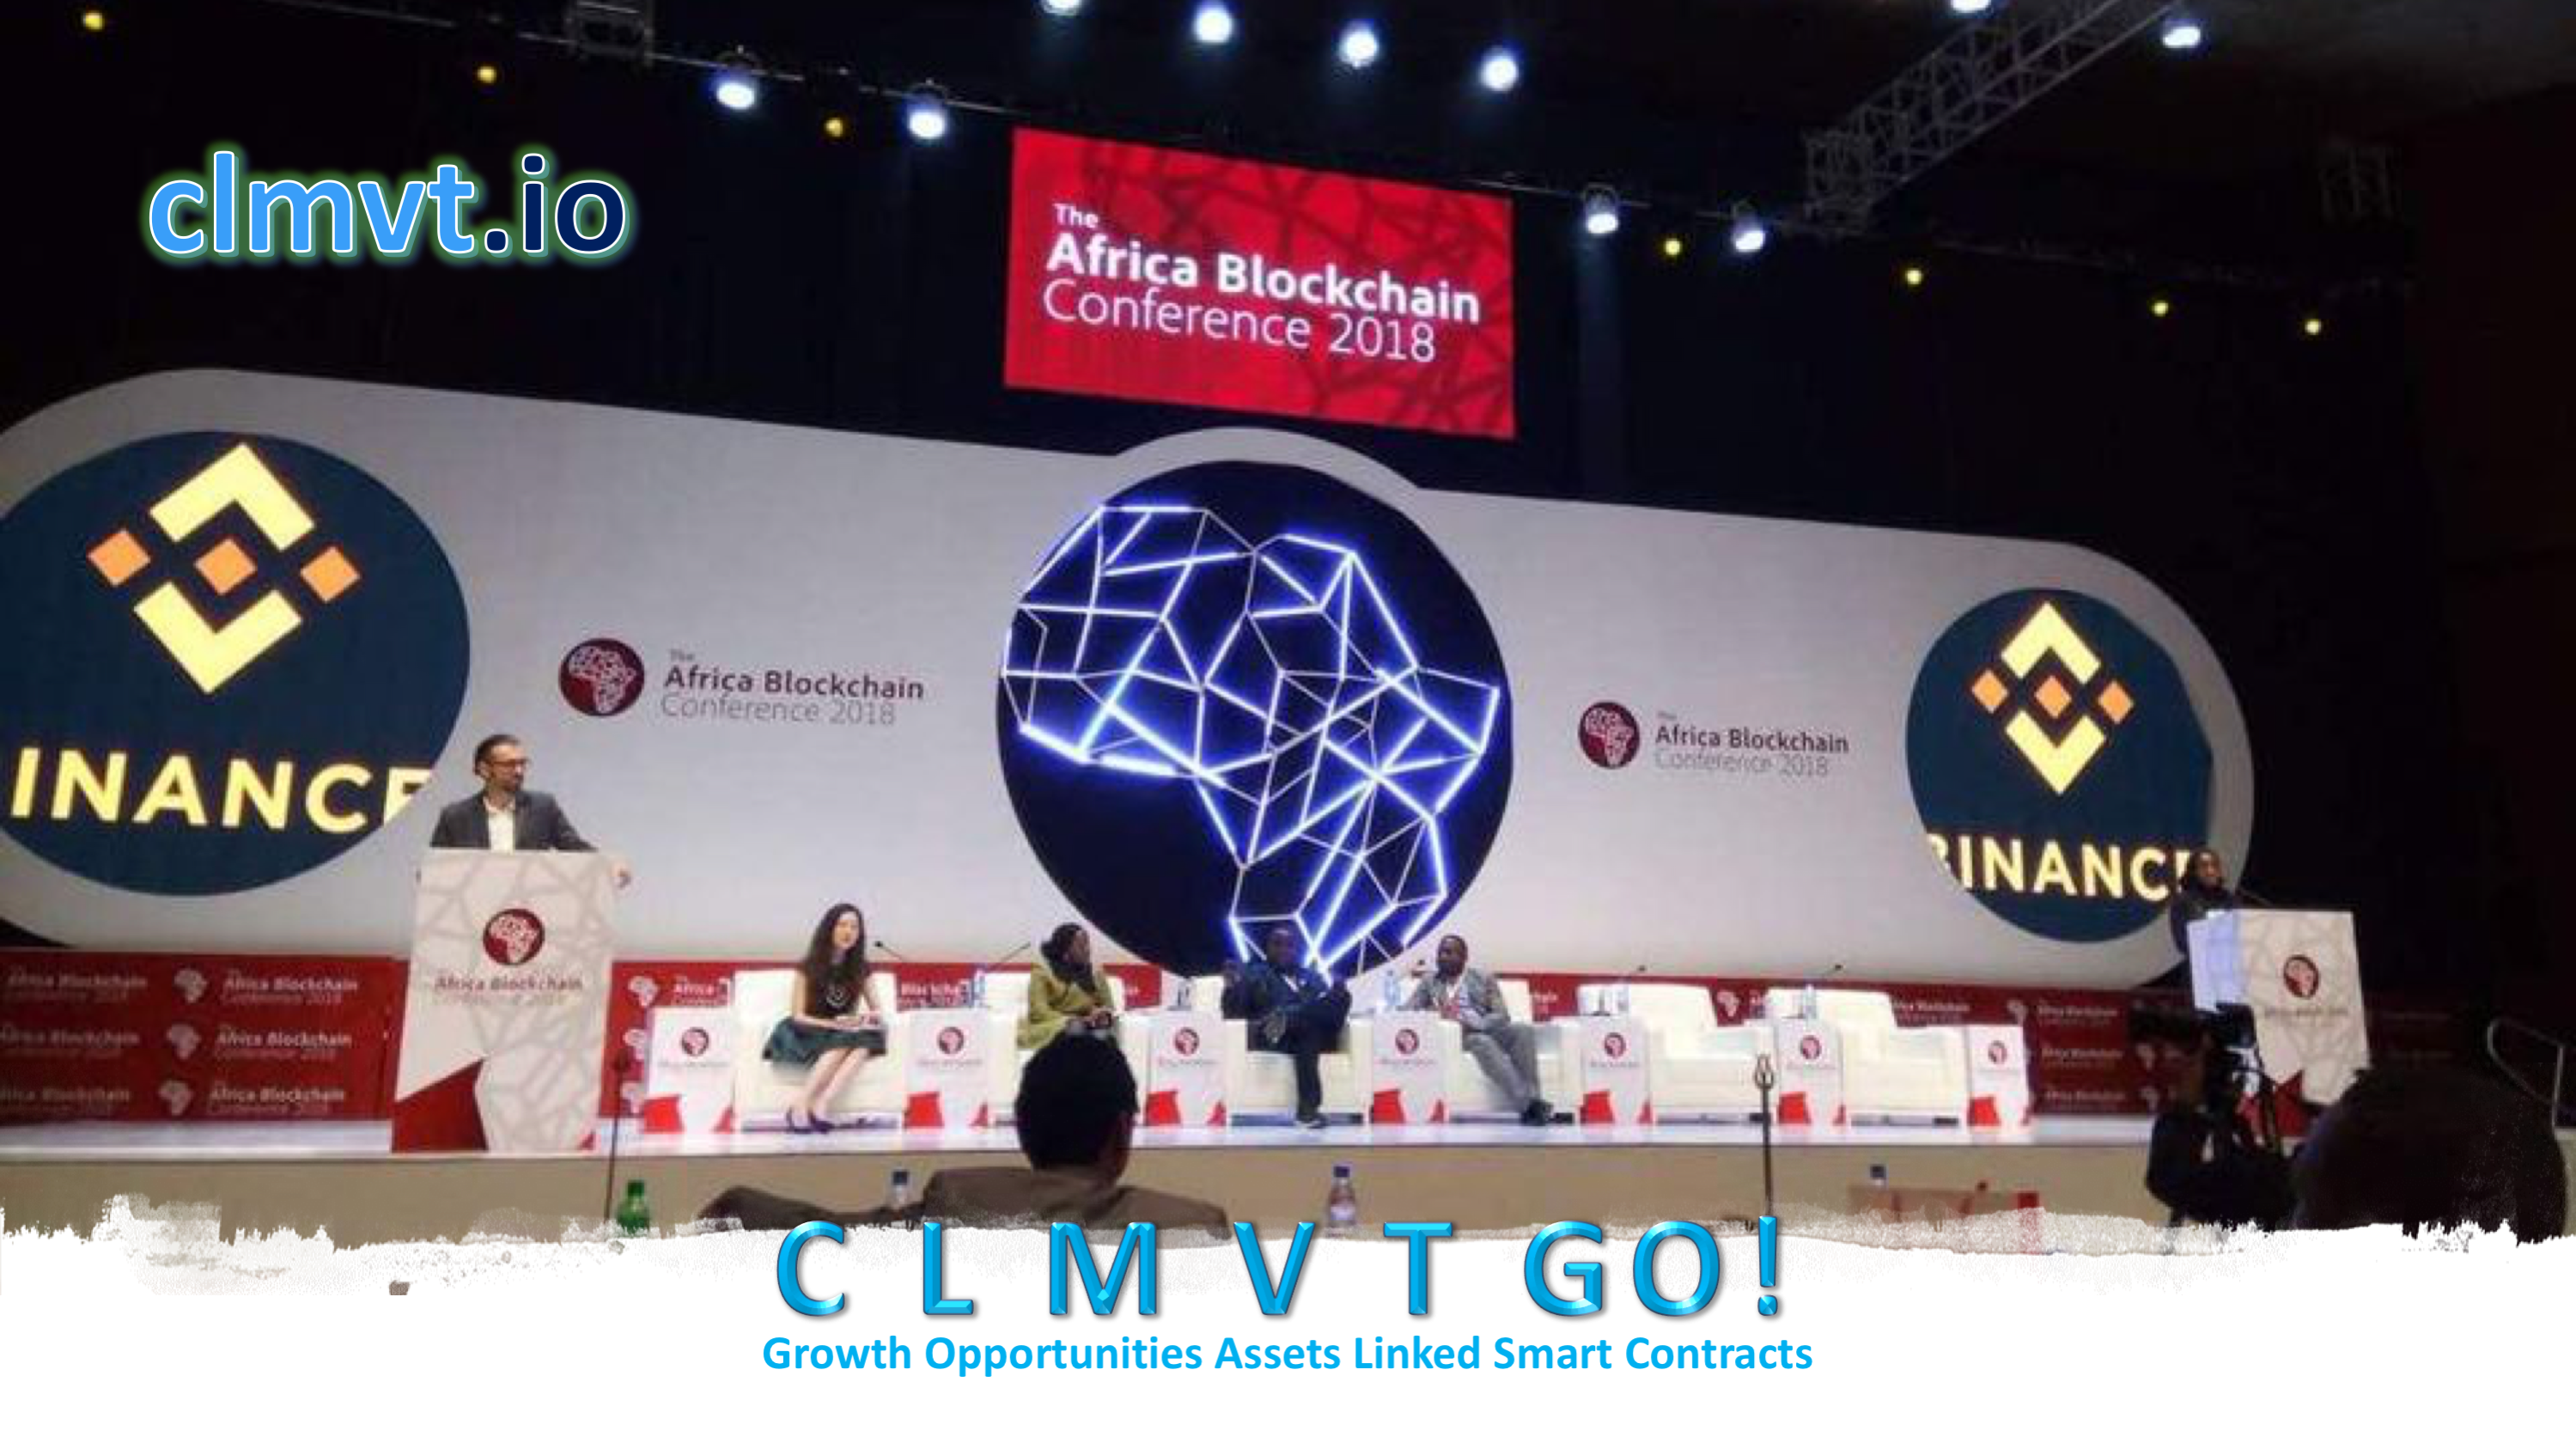 Africa Blockchain Summit 2018 CLMVT.io